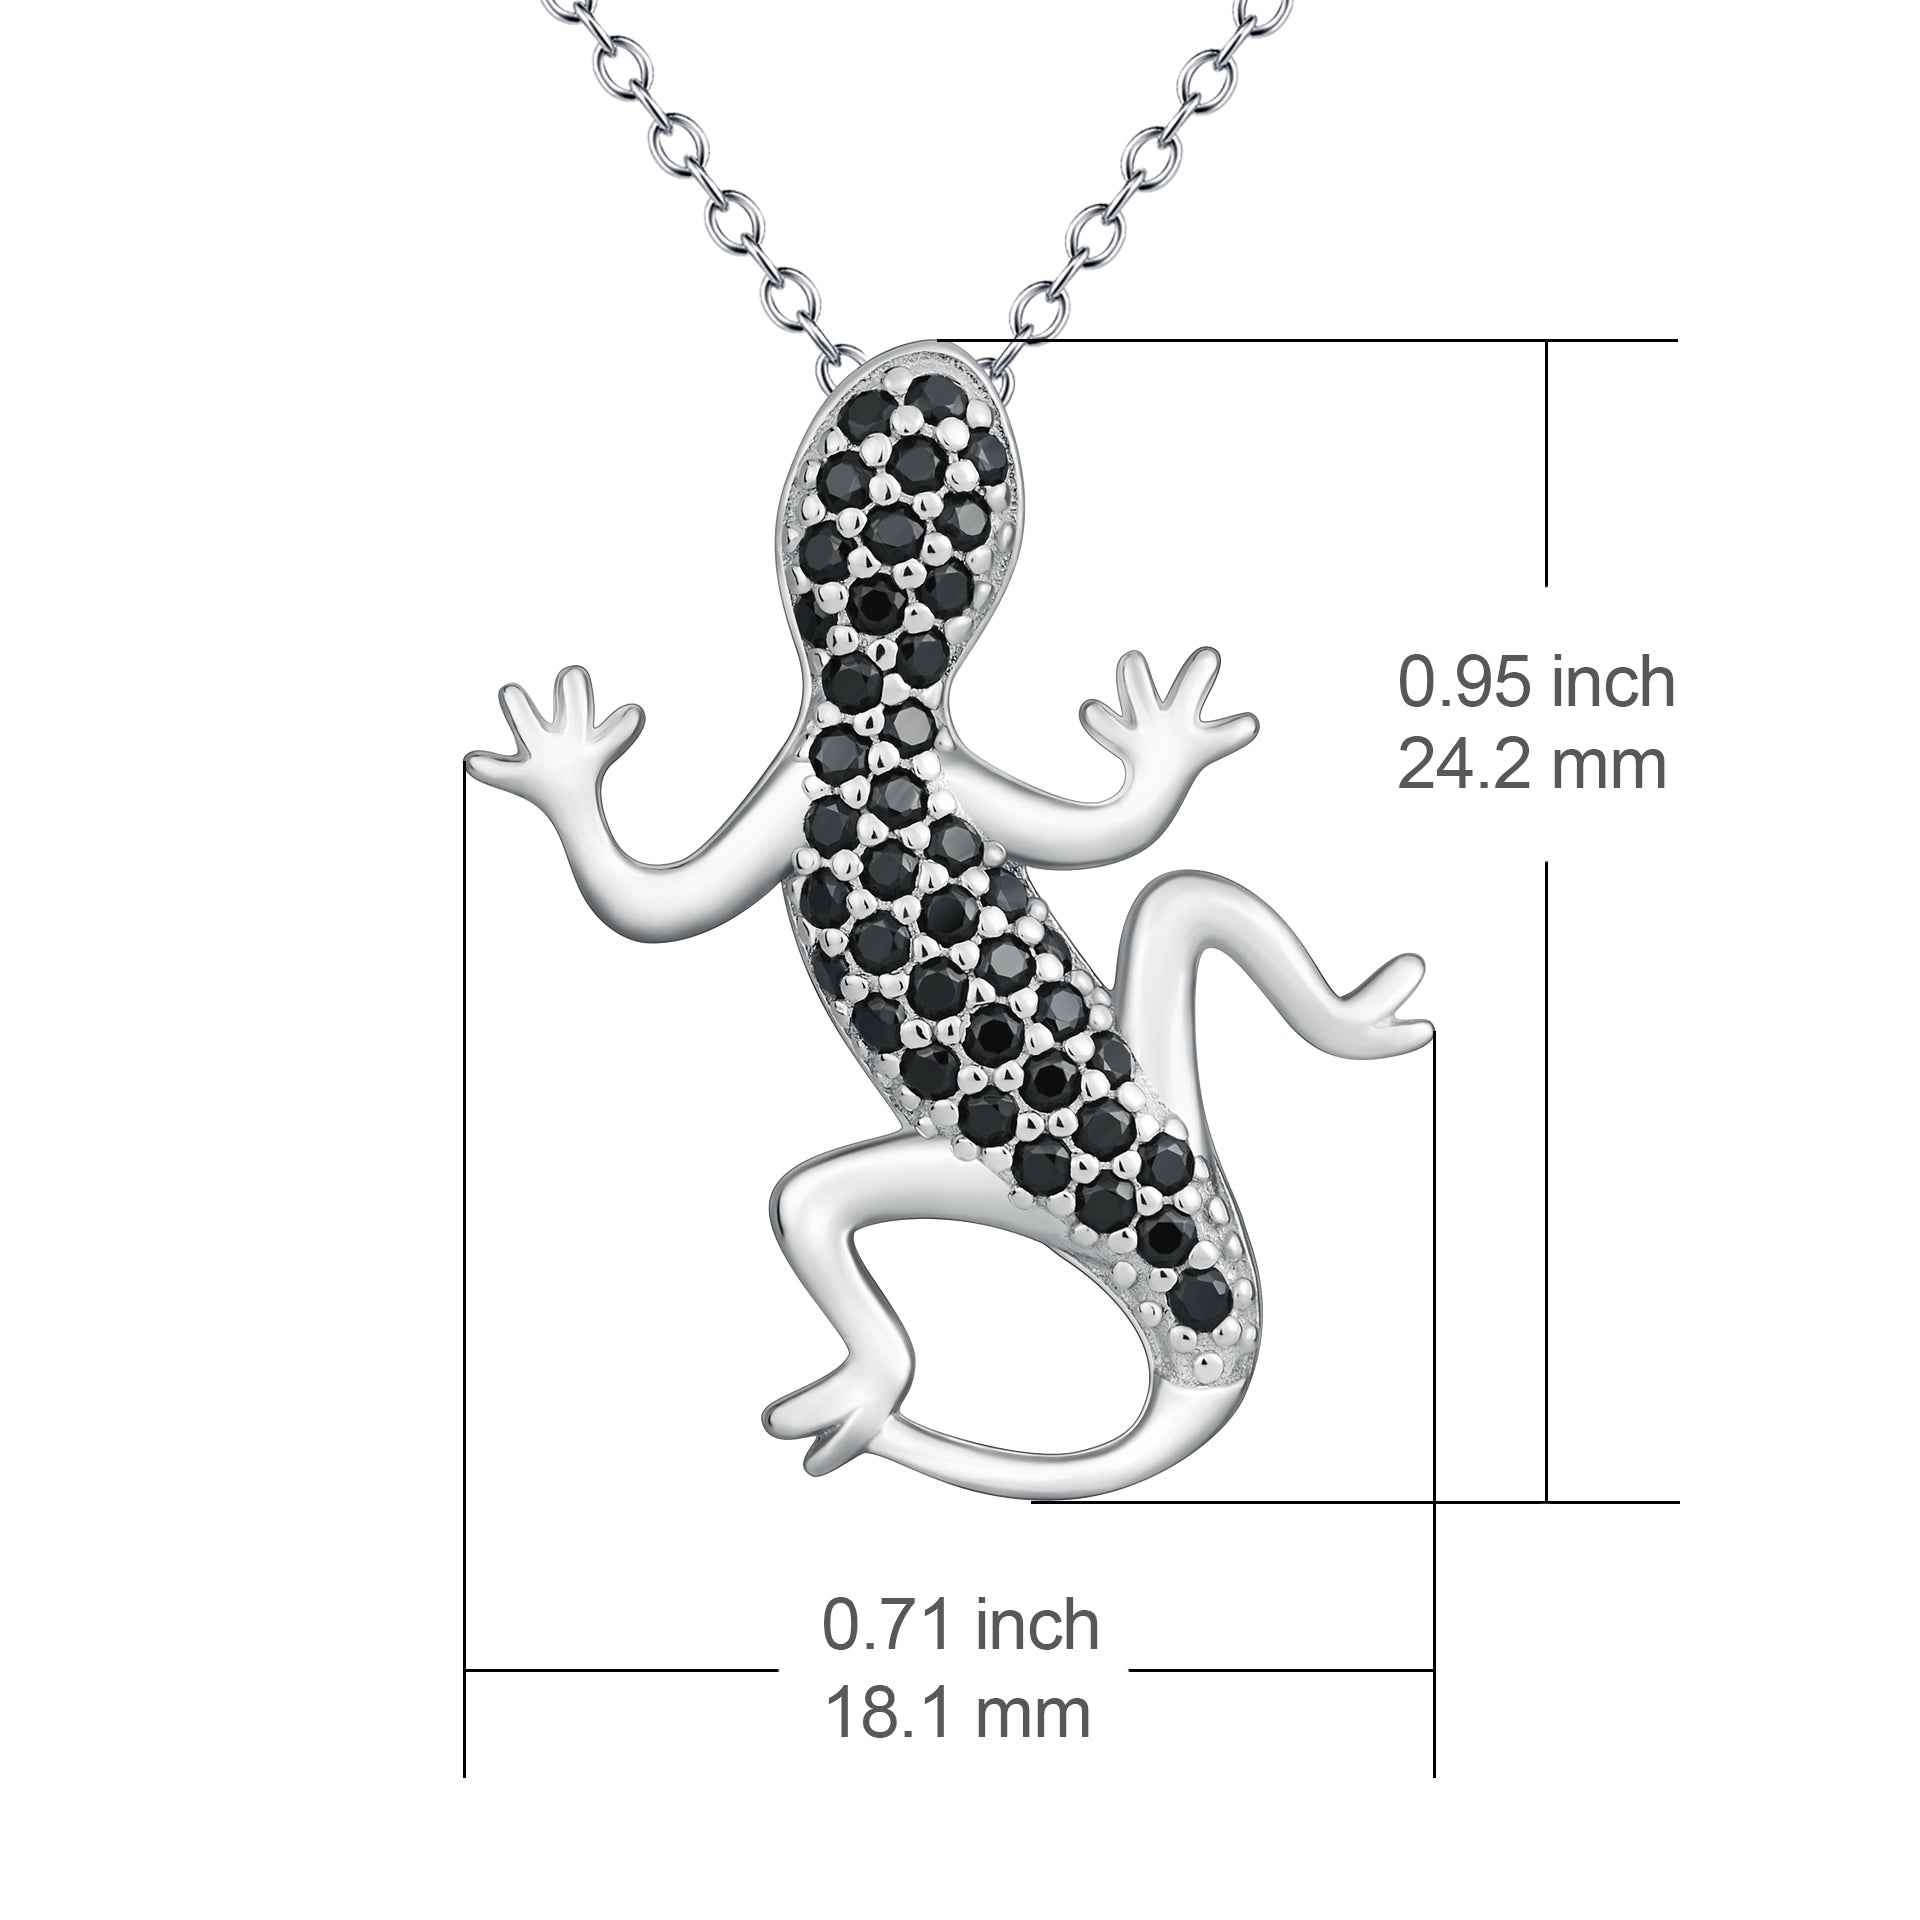 Gecko Shape Design Necklace Pendant Chain Animal Fashion Jewelry